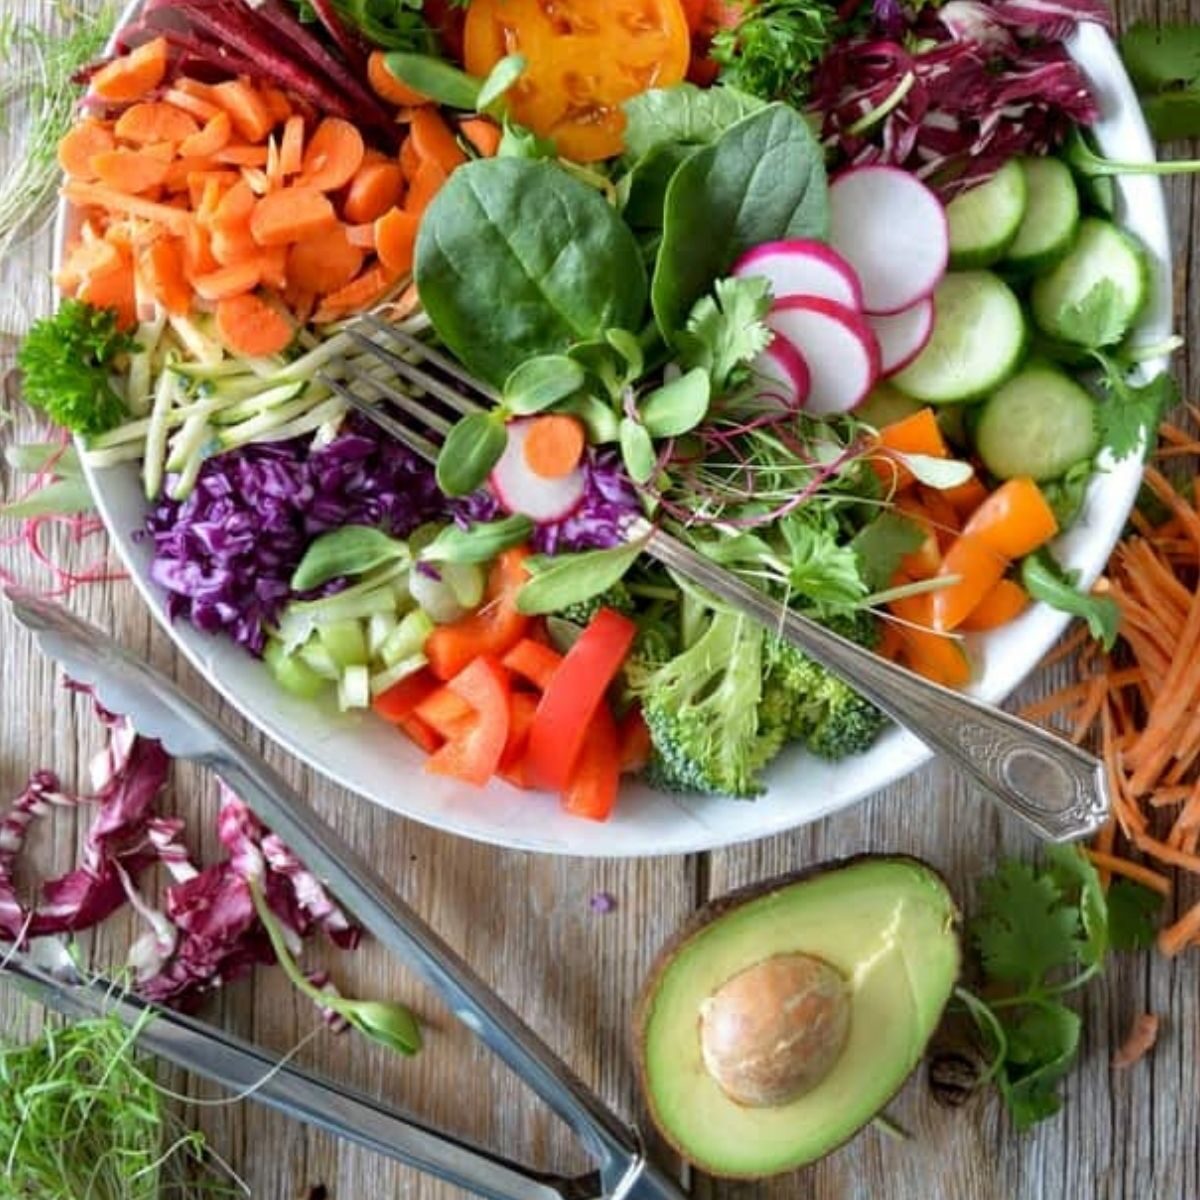 fresh vegetables and avocado help decrease inflammation